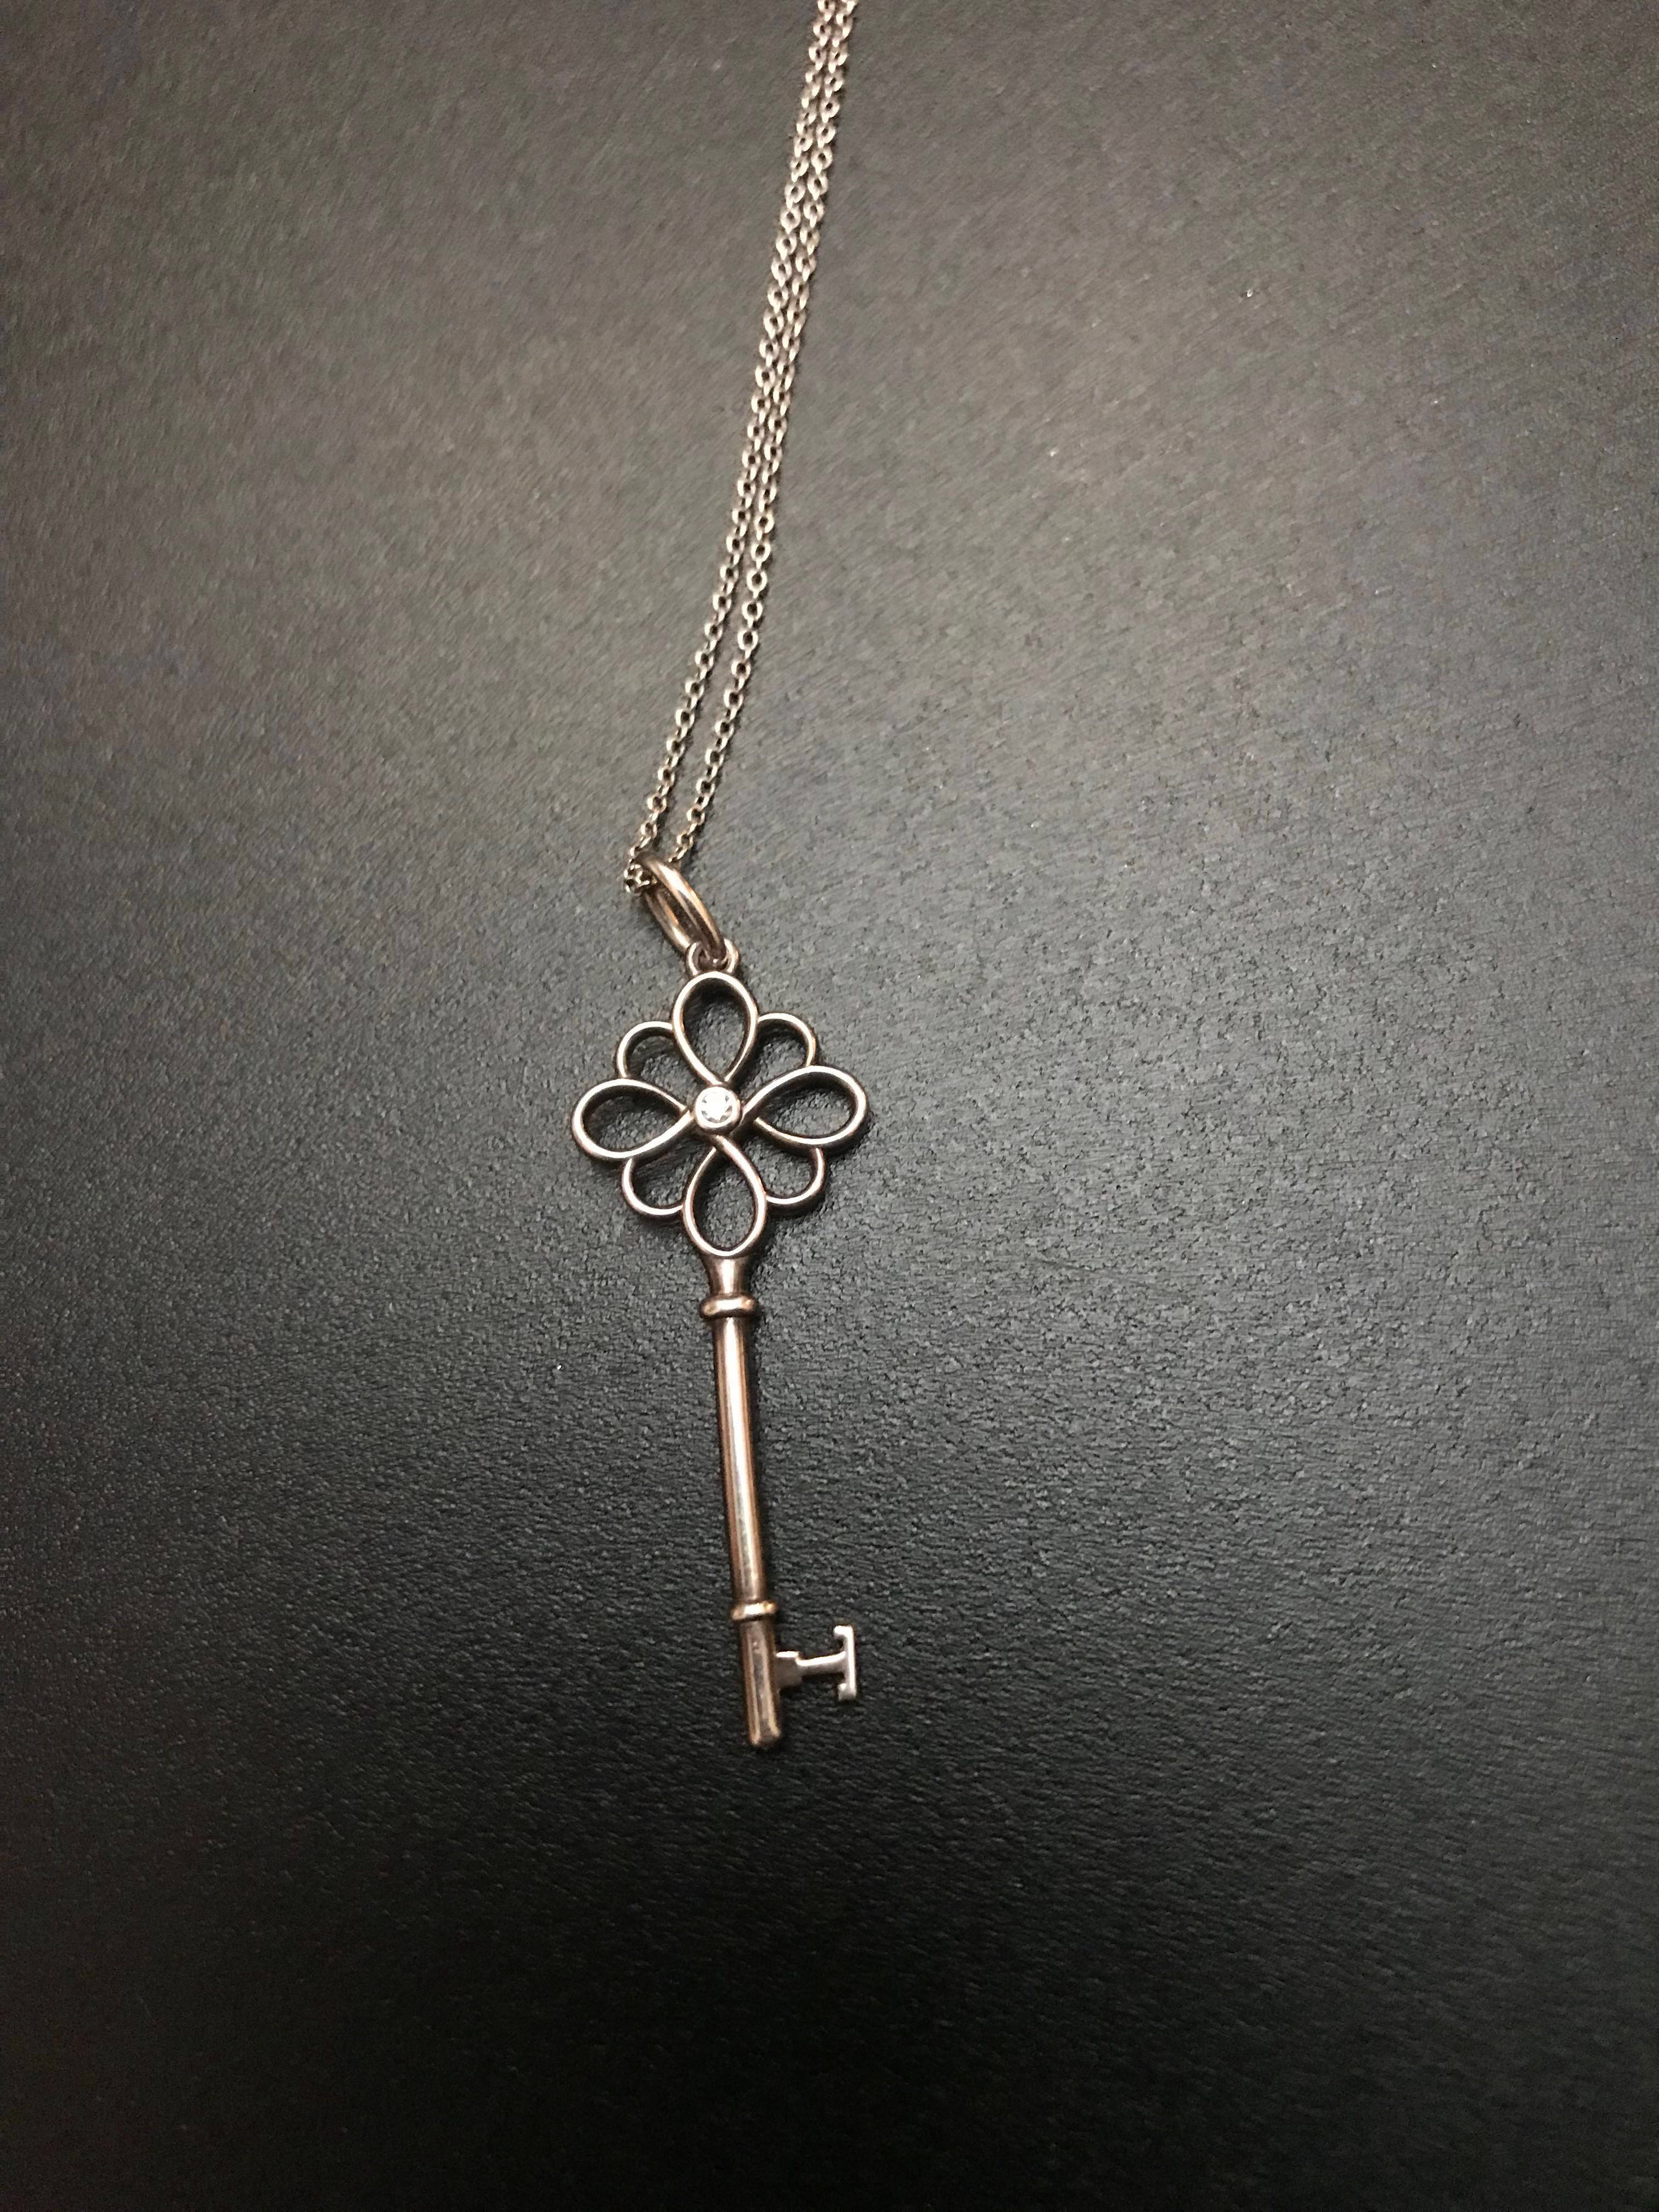 tiffany open knot key pendant